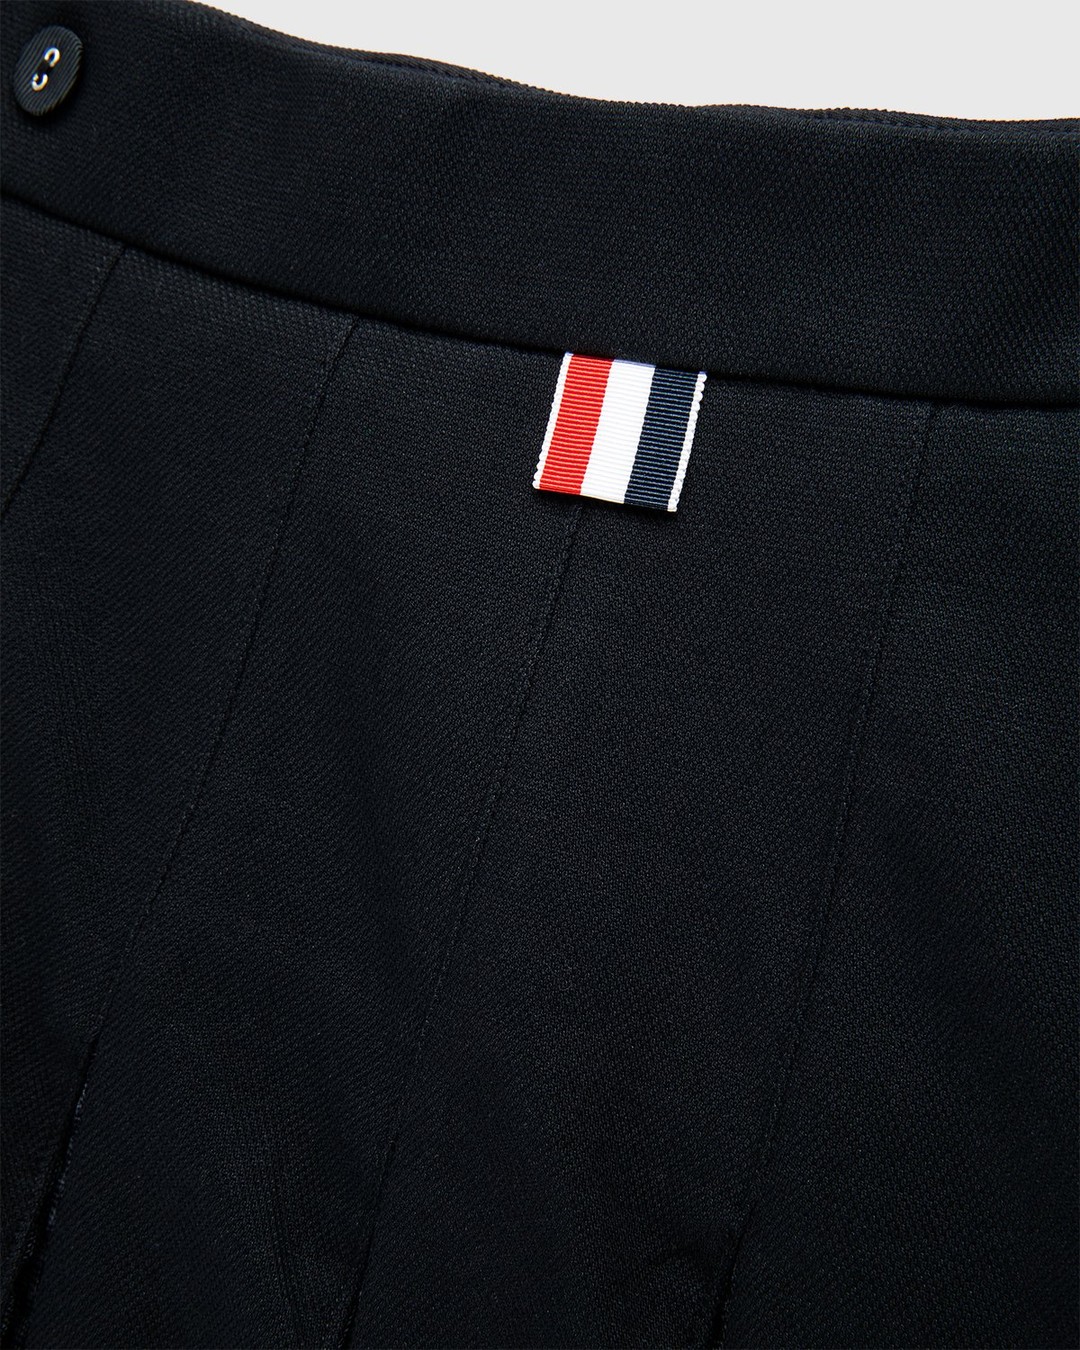 Thom Browne x Highsnobiety – Men's Pleated Mesh Skirt Black - Midi - Black - Image 4